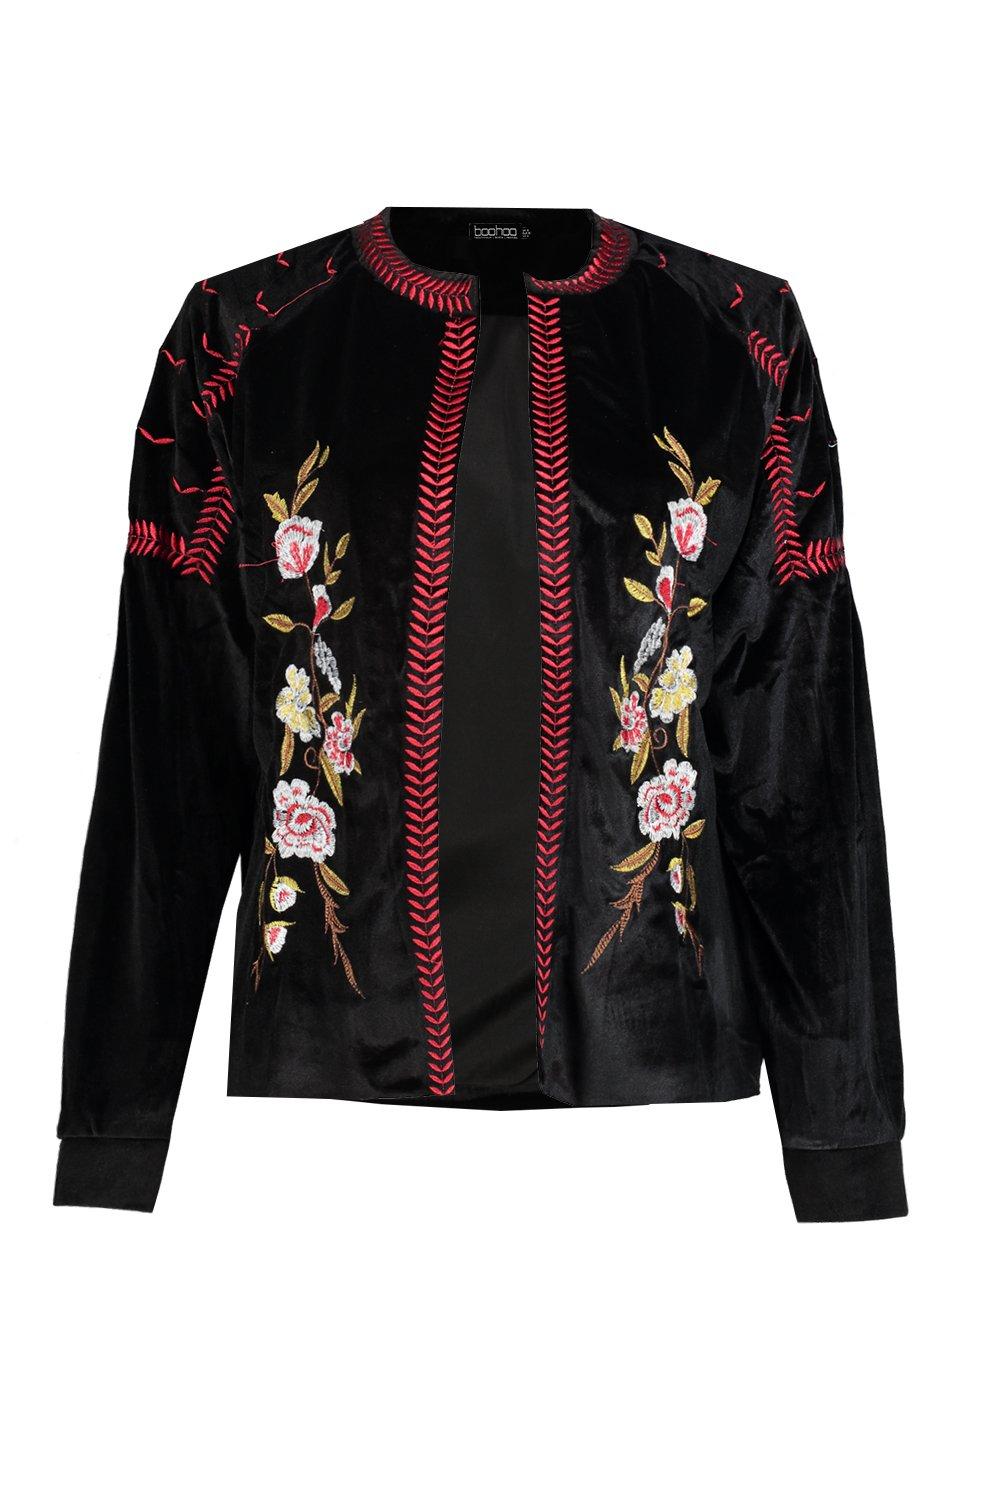 Boohoo Womens Lucy Embroidered Velvet Jacket | eBay